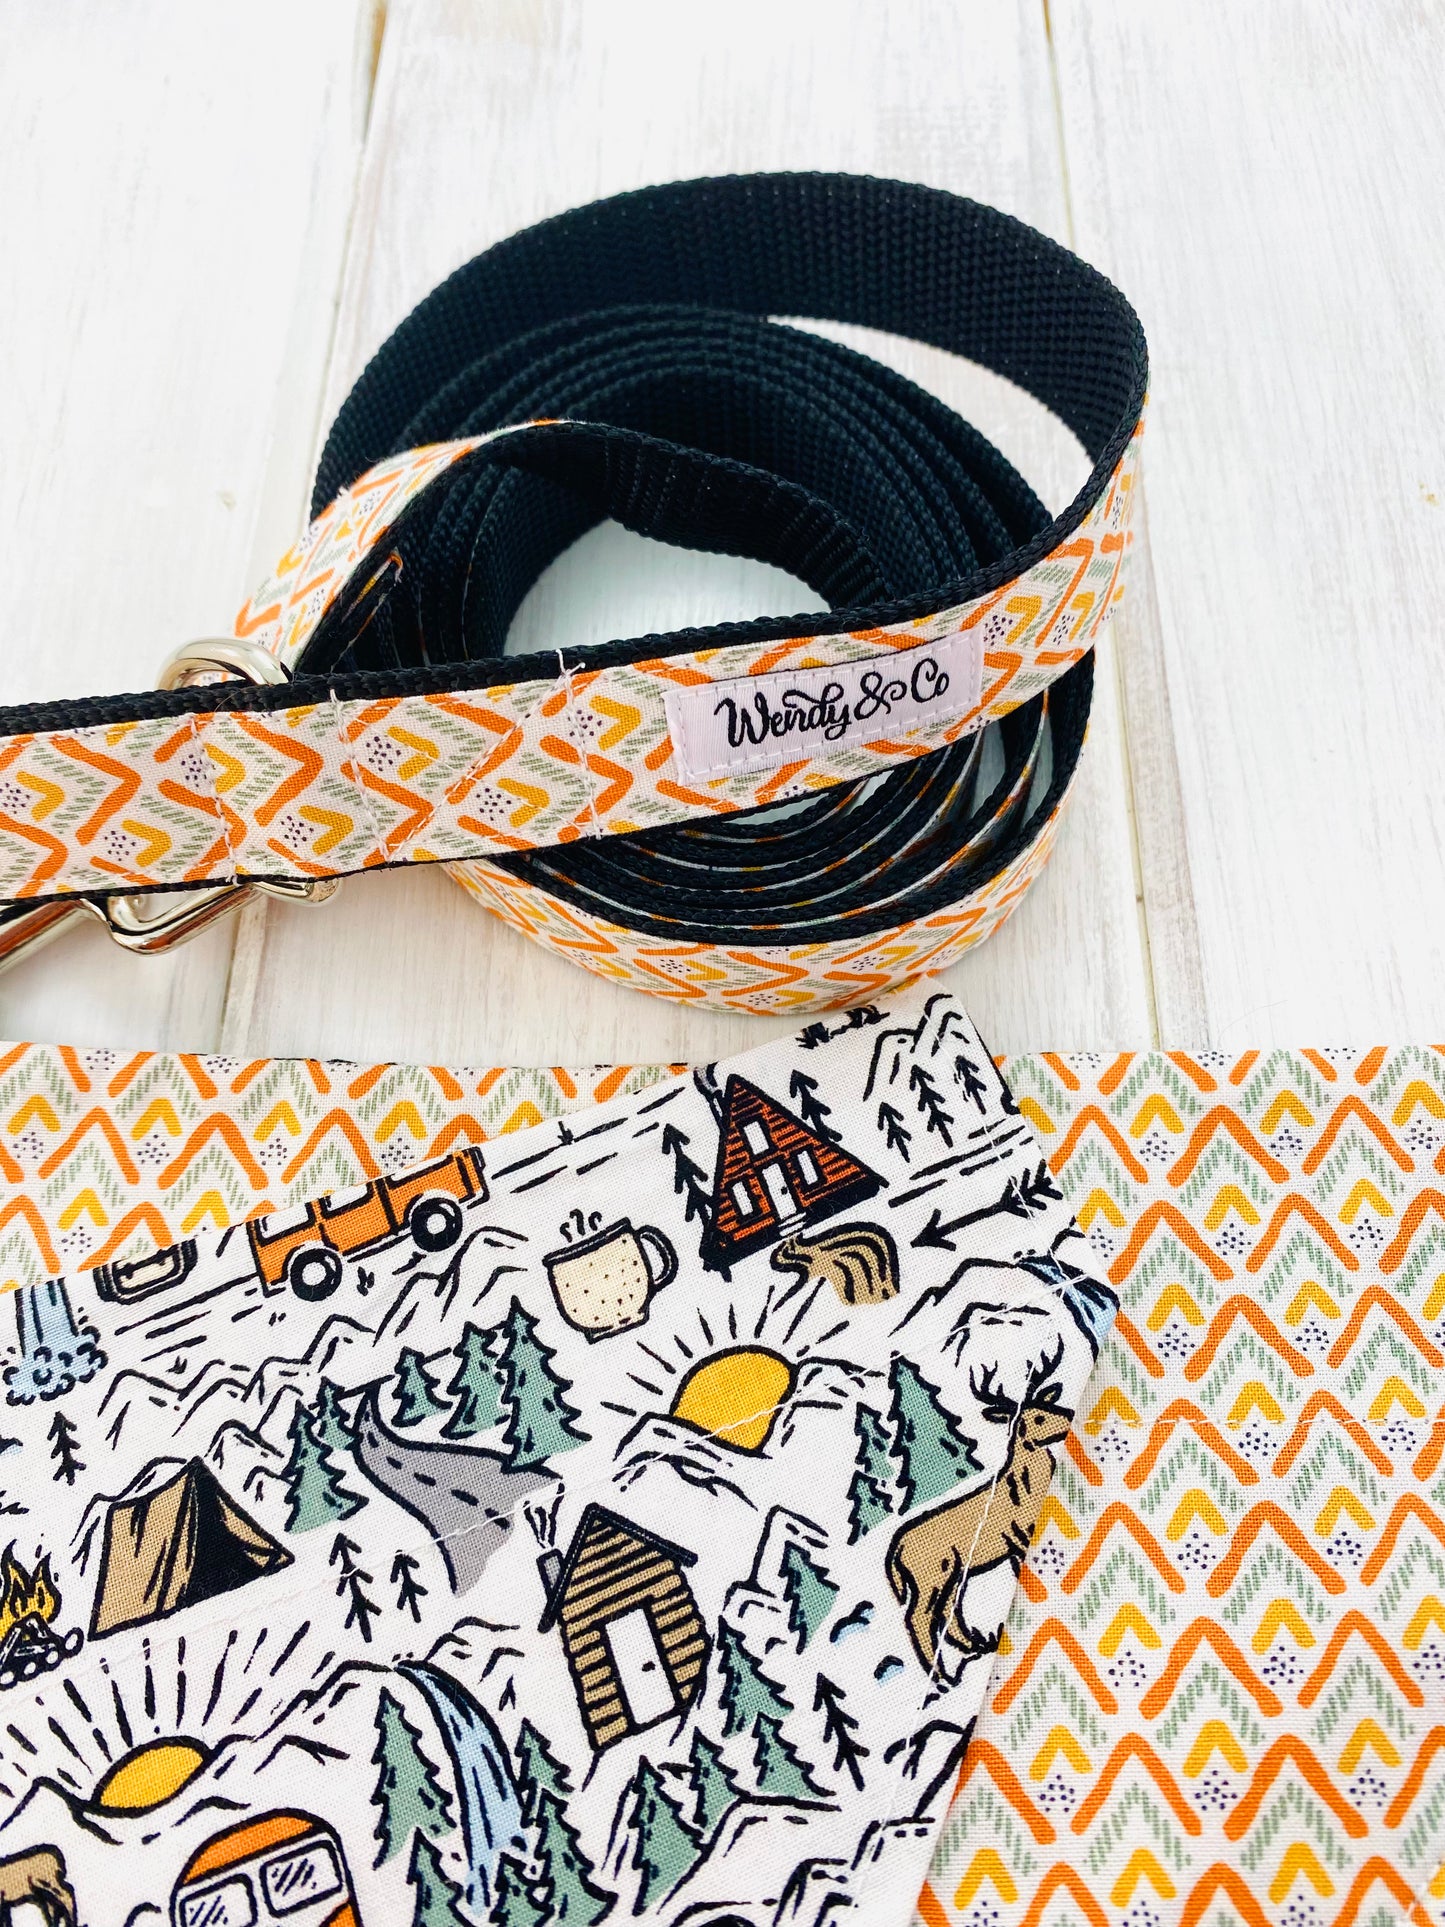 Orange and olive mountain print dog leash and bandana.